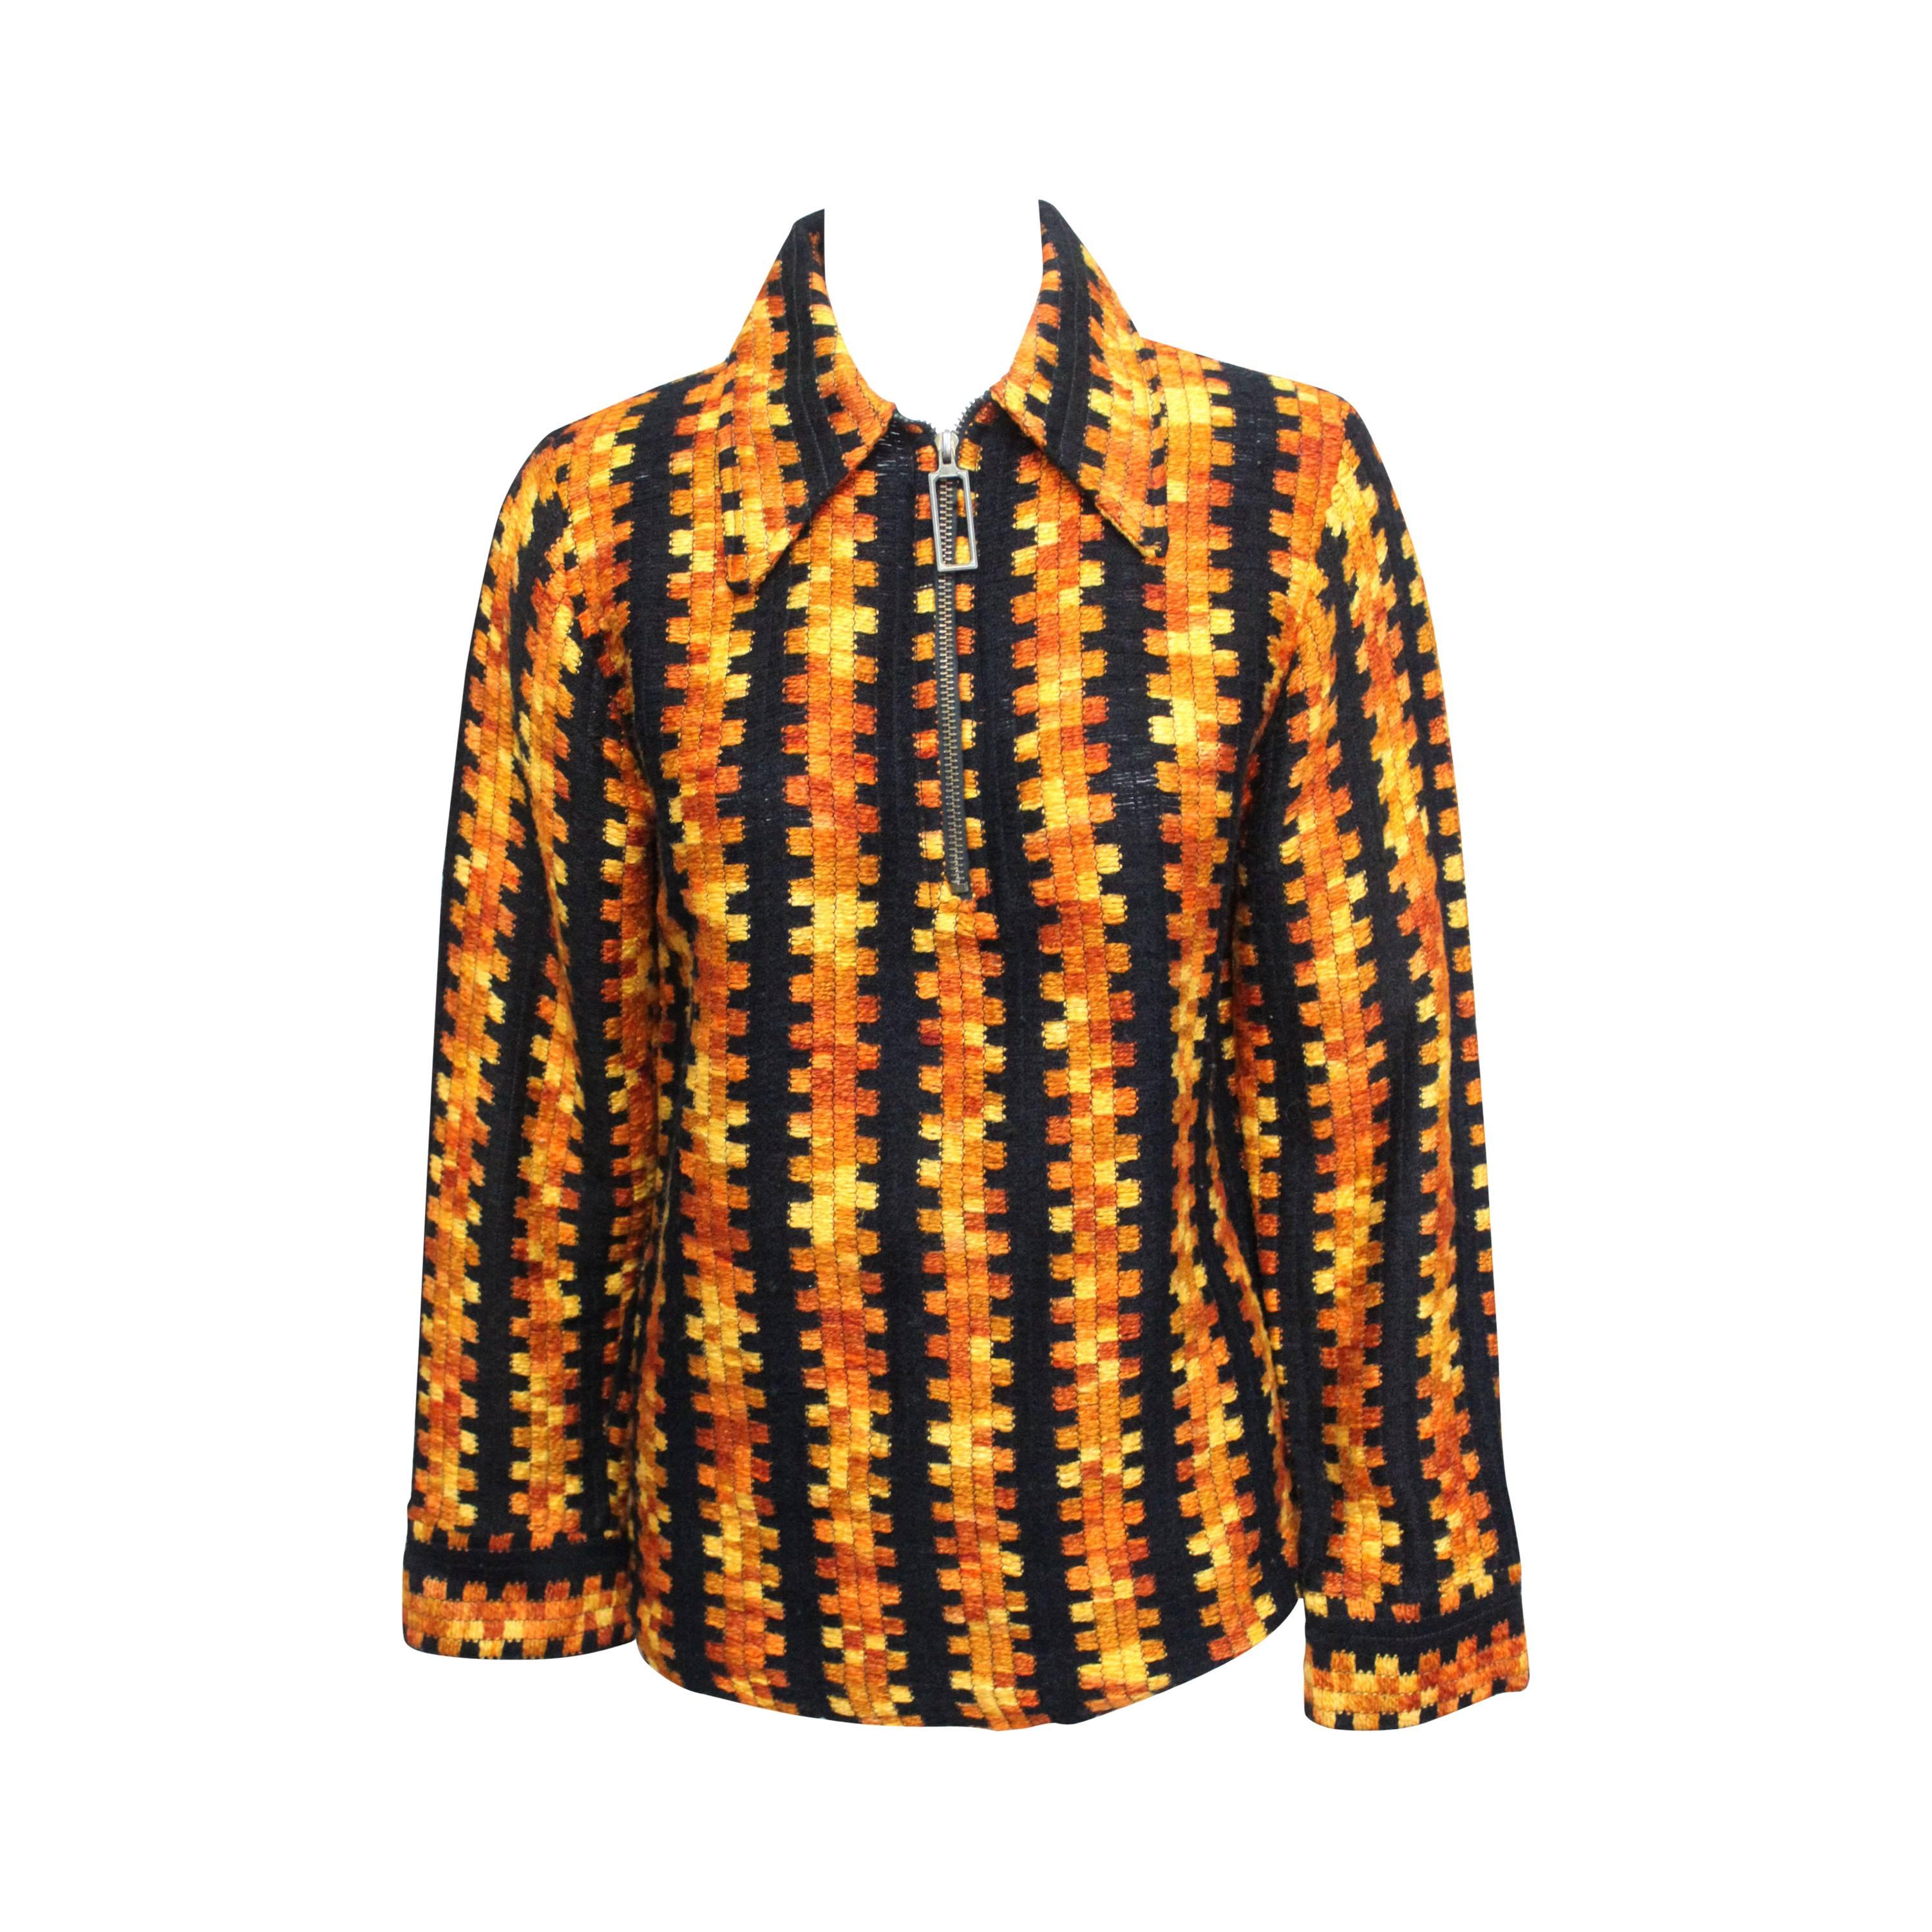 Mens 1970s Geometric Ombre Knit Shirt